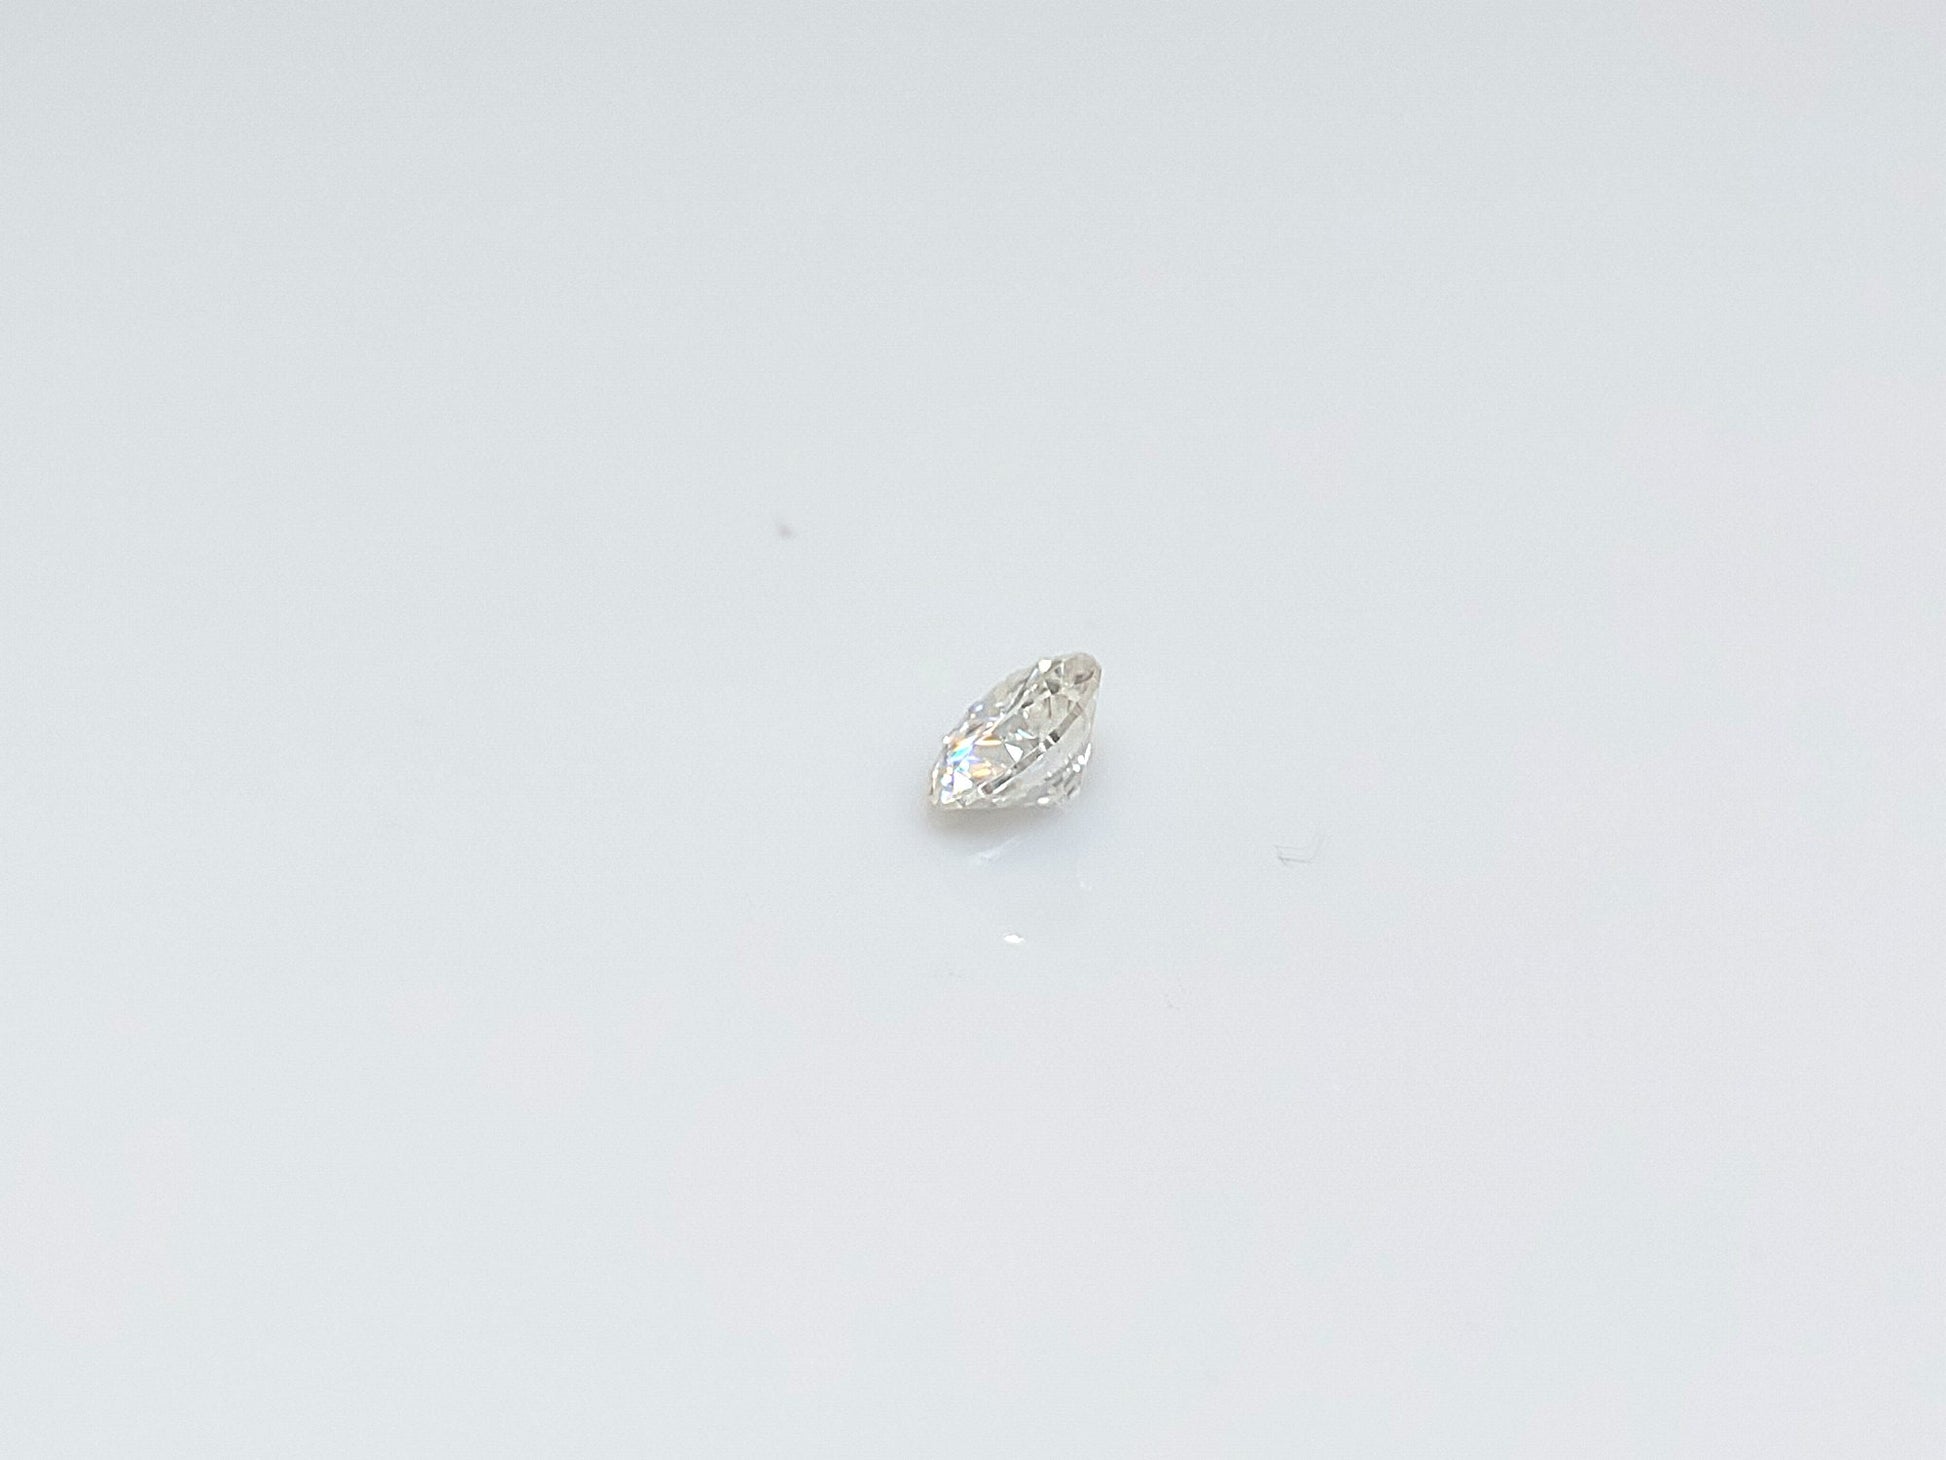 A round brilliant cut moissanite gem.